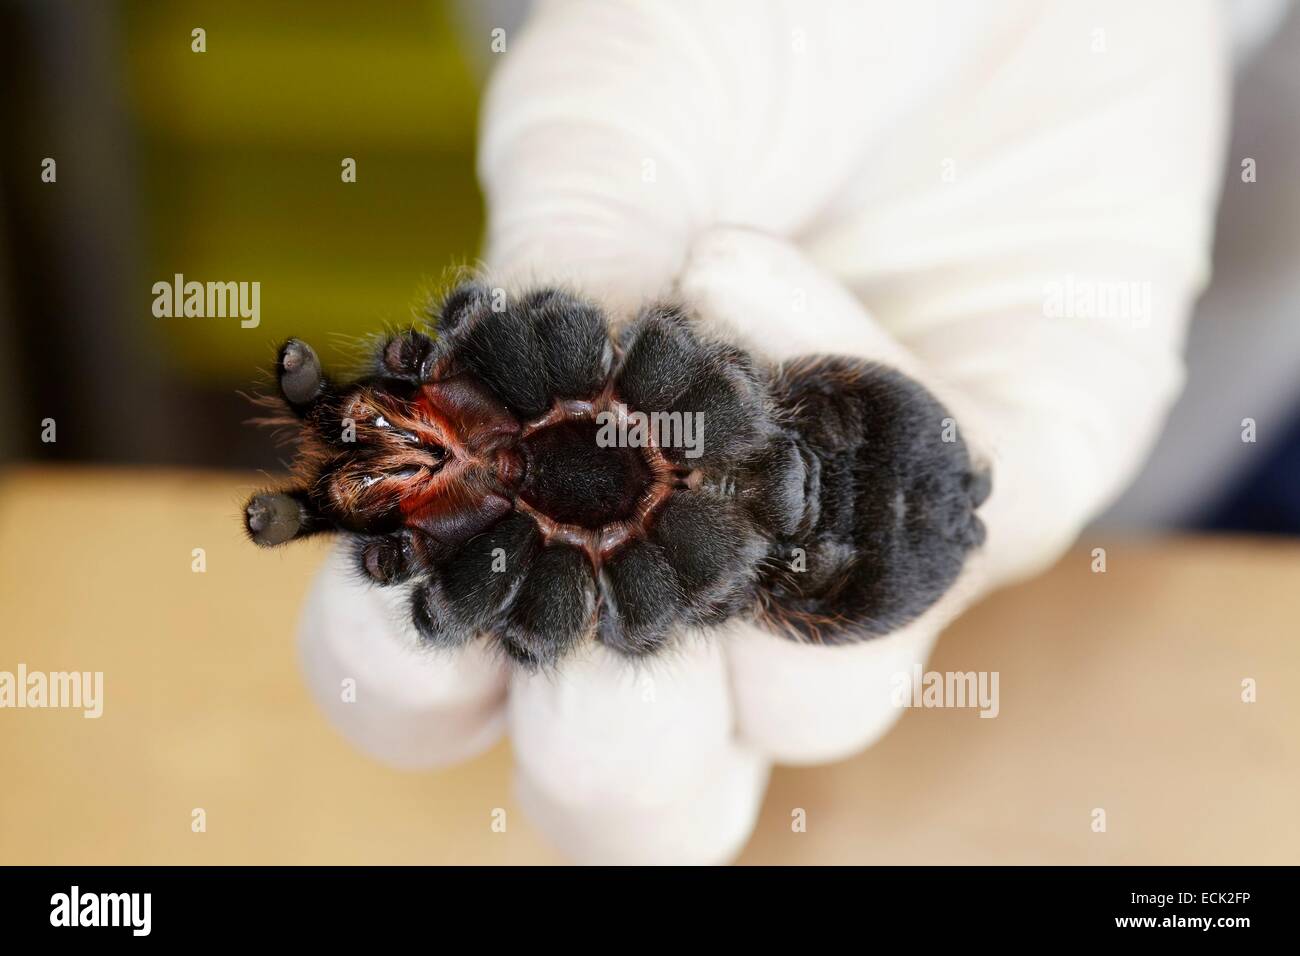 France, Paris, National Museum of Natural History, manipulation of tarantula Brachypelma albopilosum (Theraphosidae) Stock Photo